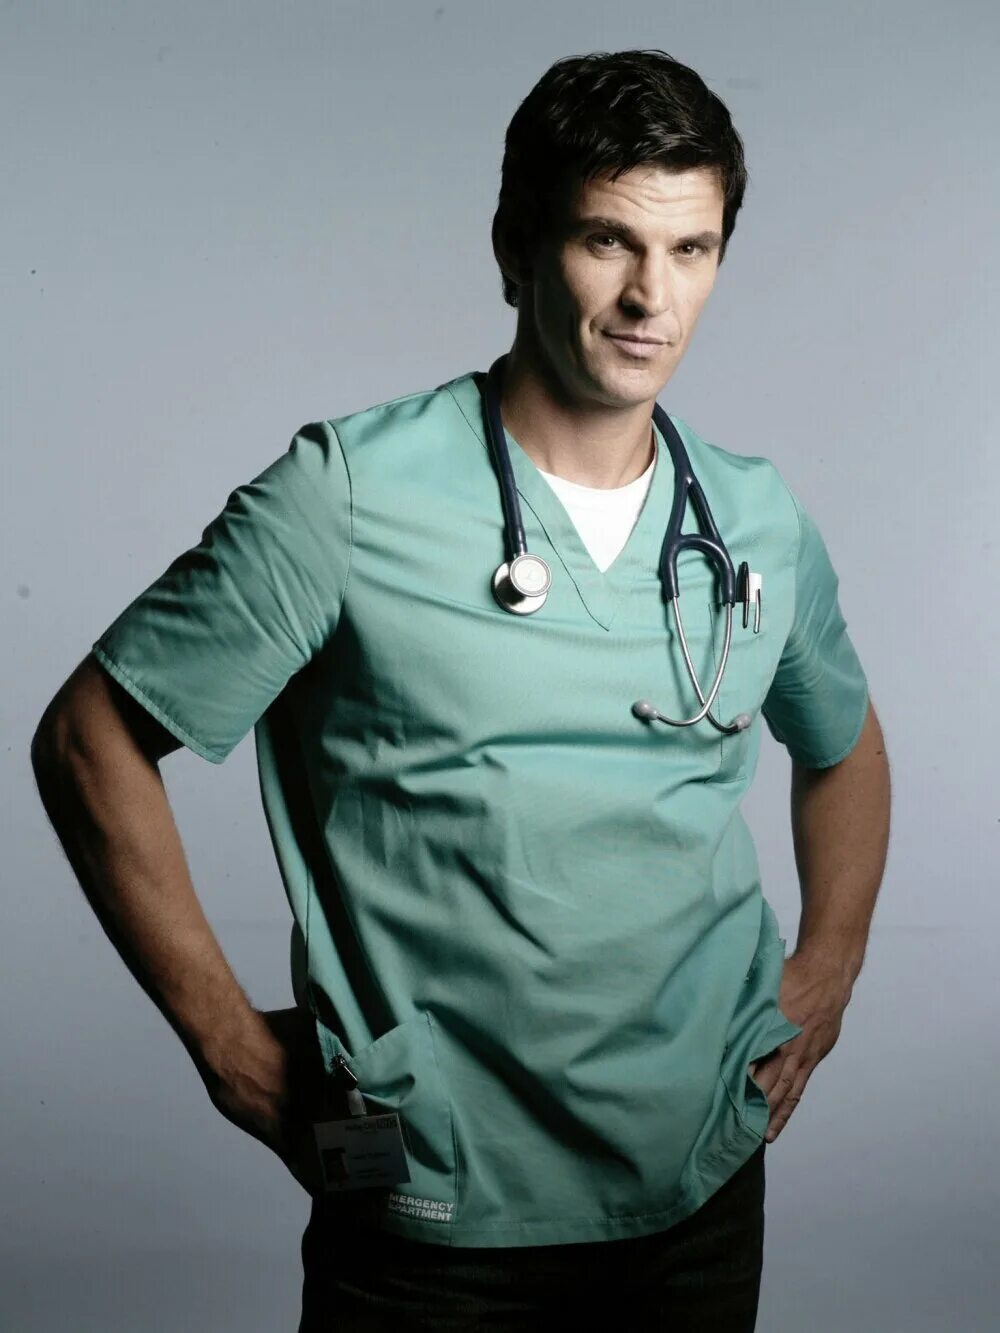 Муж врач гинеколог. Тристан Геммилл. Врач мужчина. Красивый парень врач. Красивый доктор.